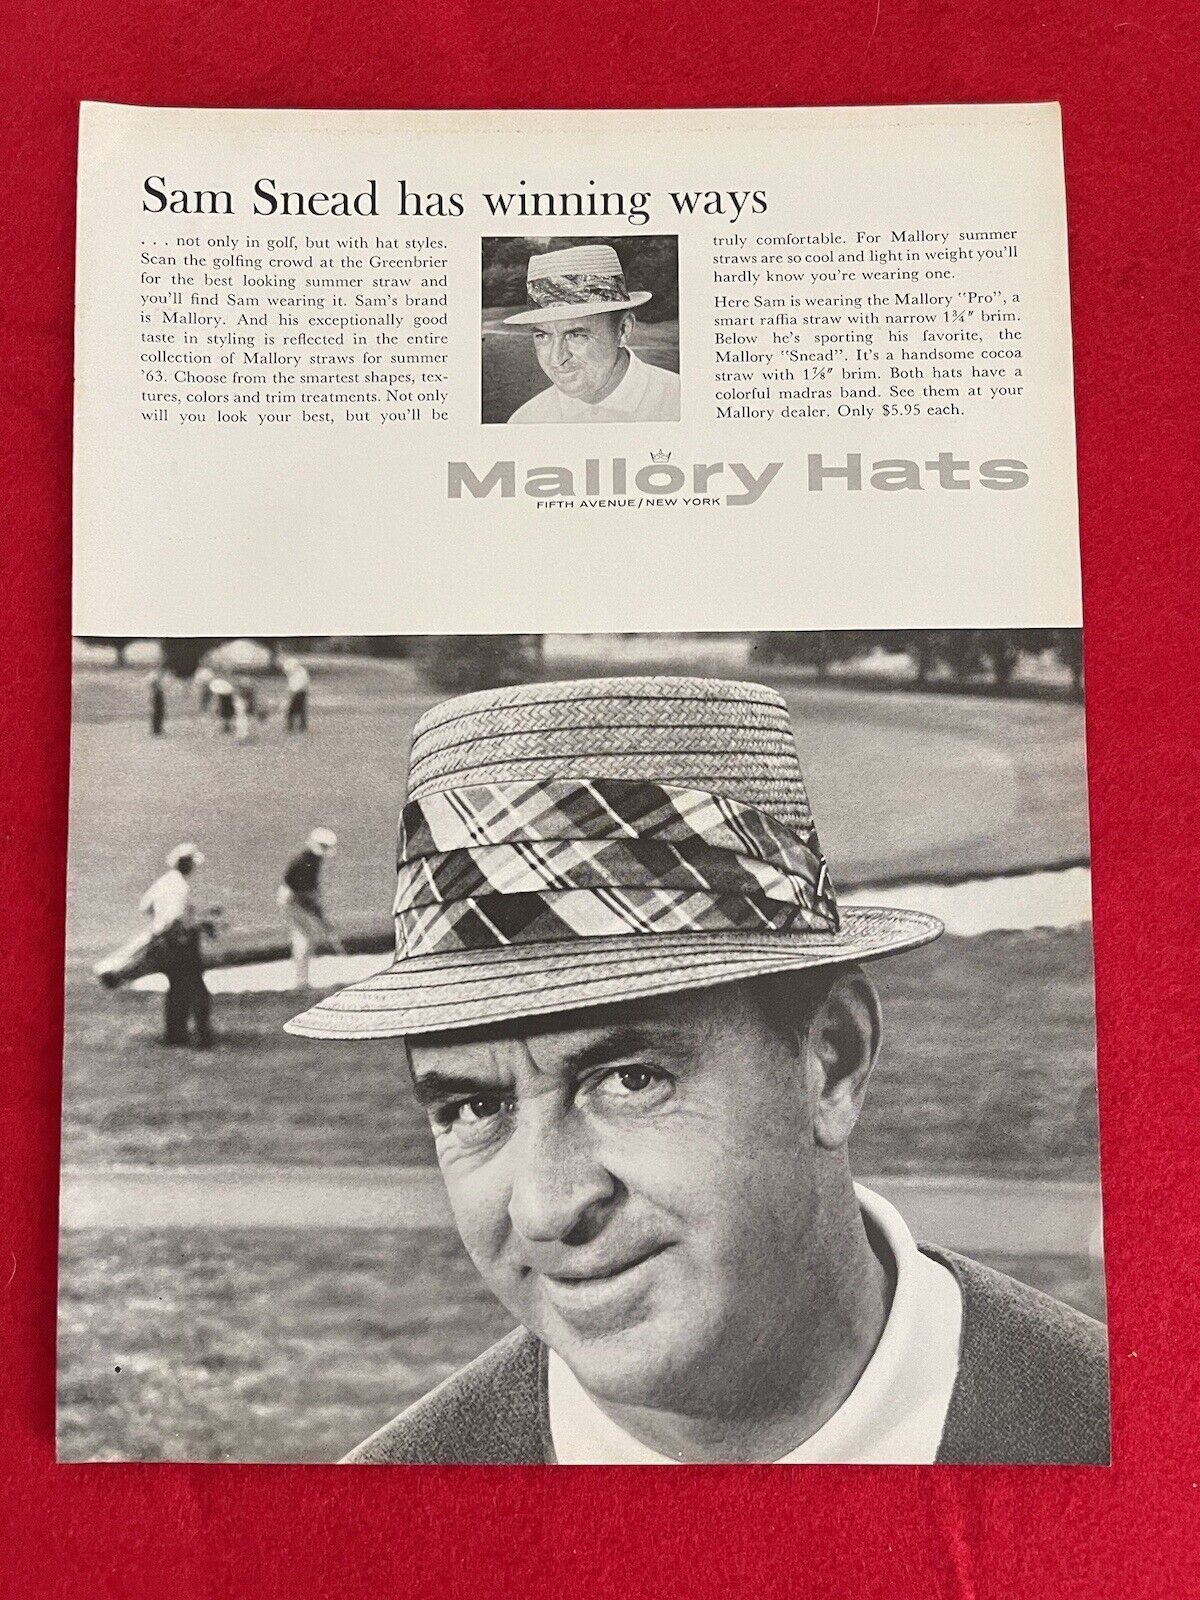 Vintage 1963 Mallory Hats Sam Snead Print Ad